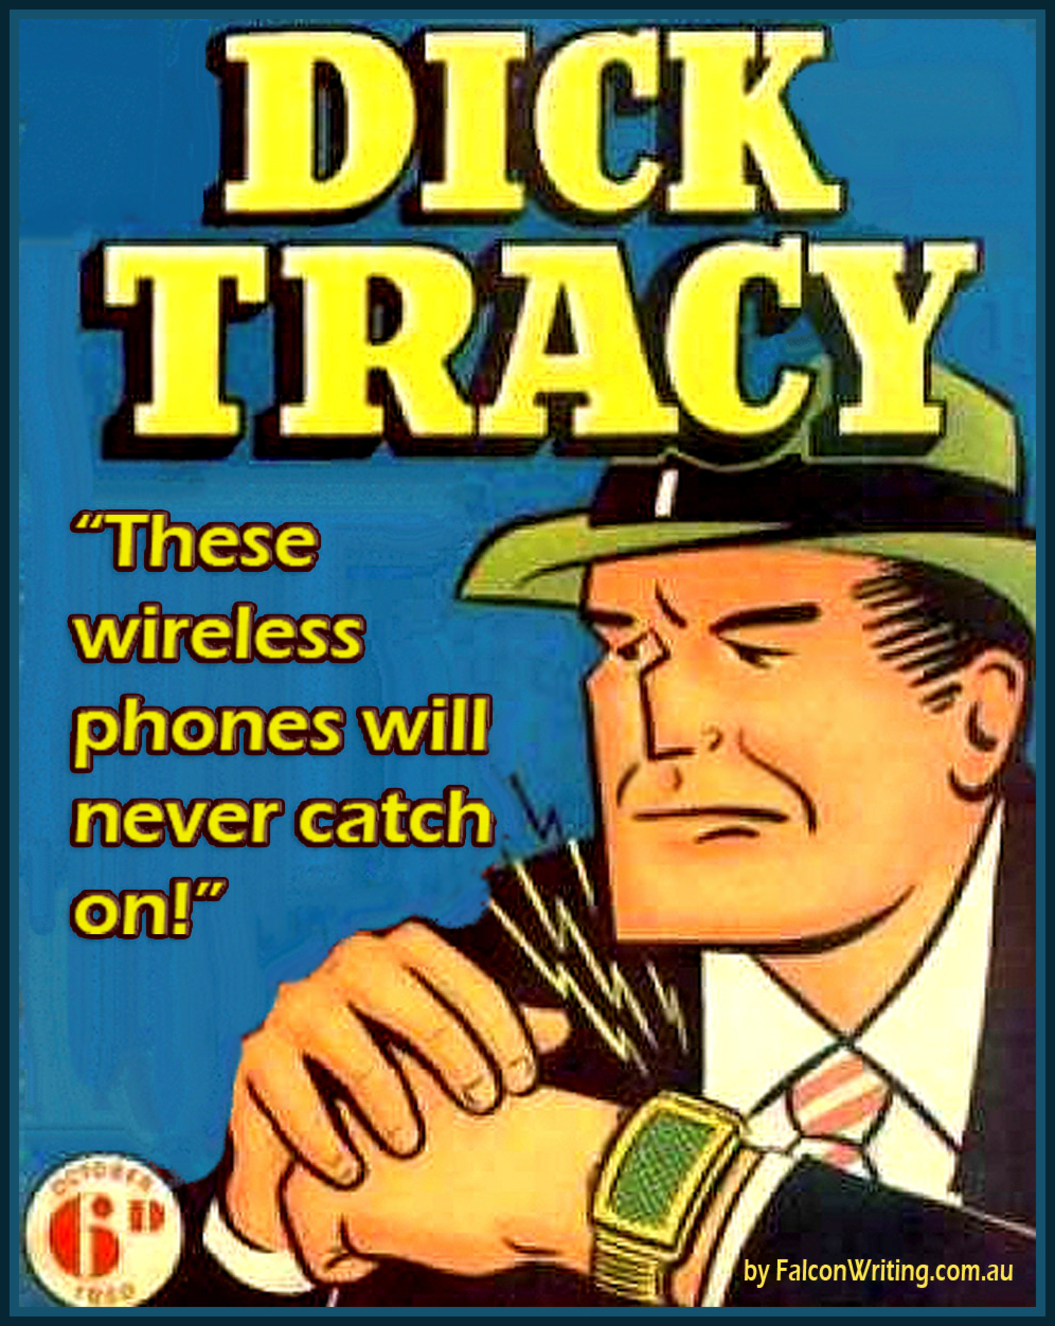 Dick Tracy #25